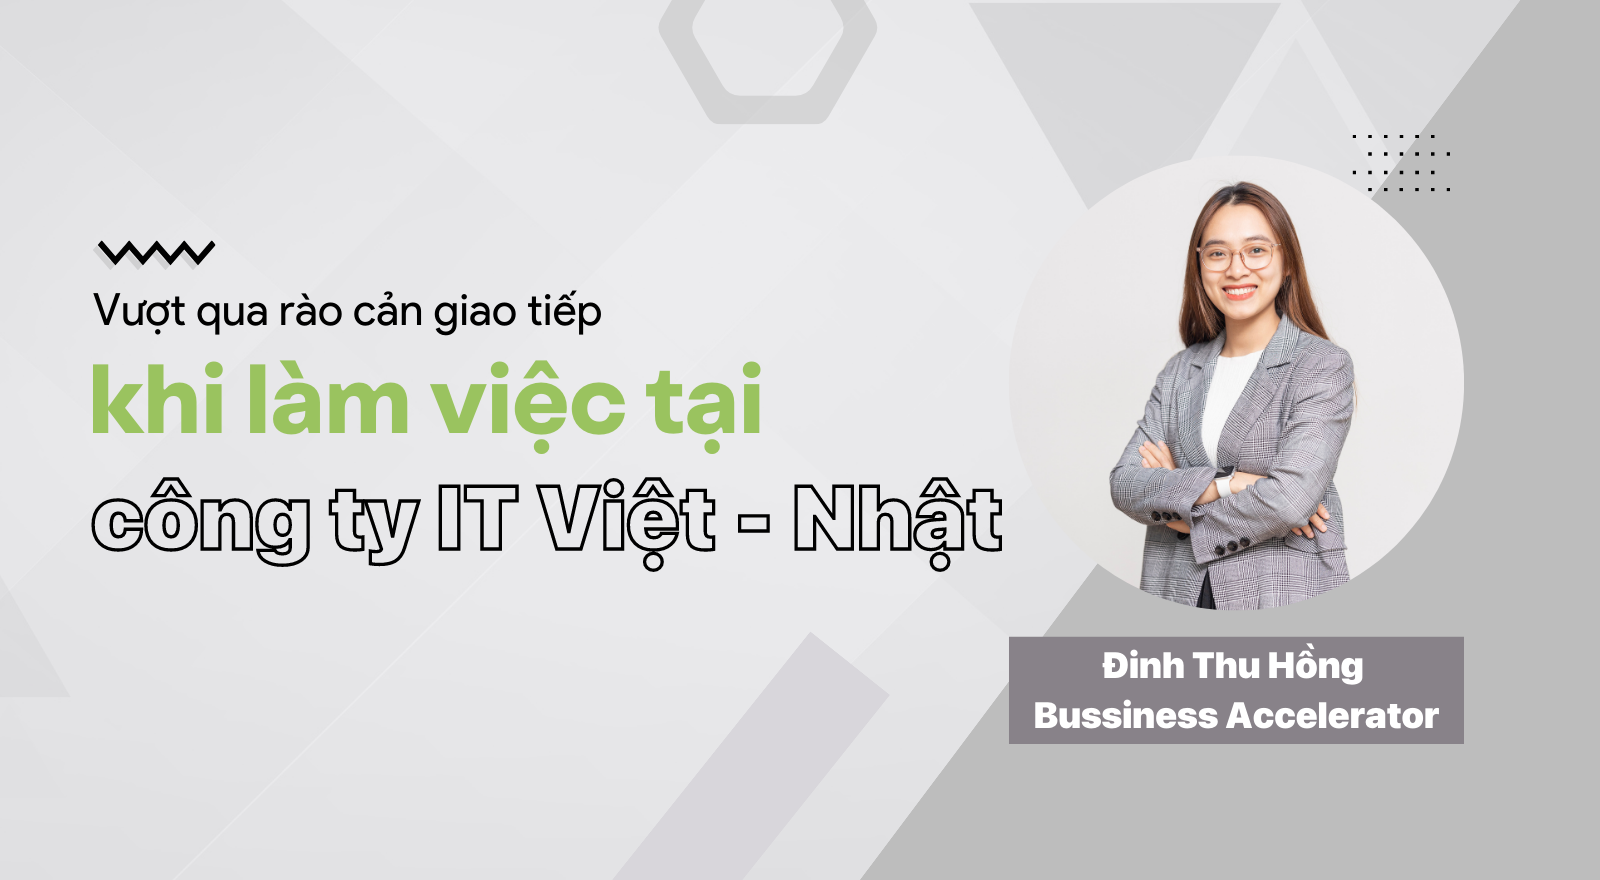 Lam Viec Tai Cong Ty It Viet Nhat